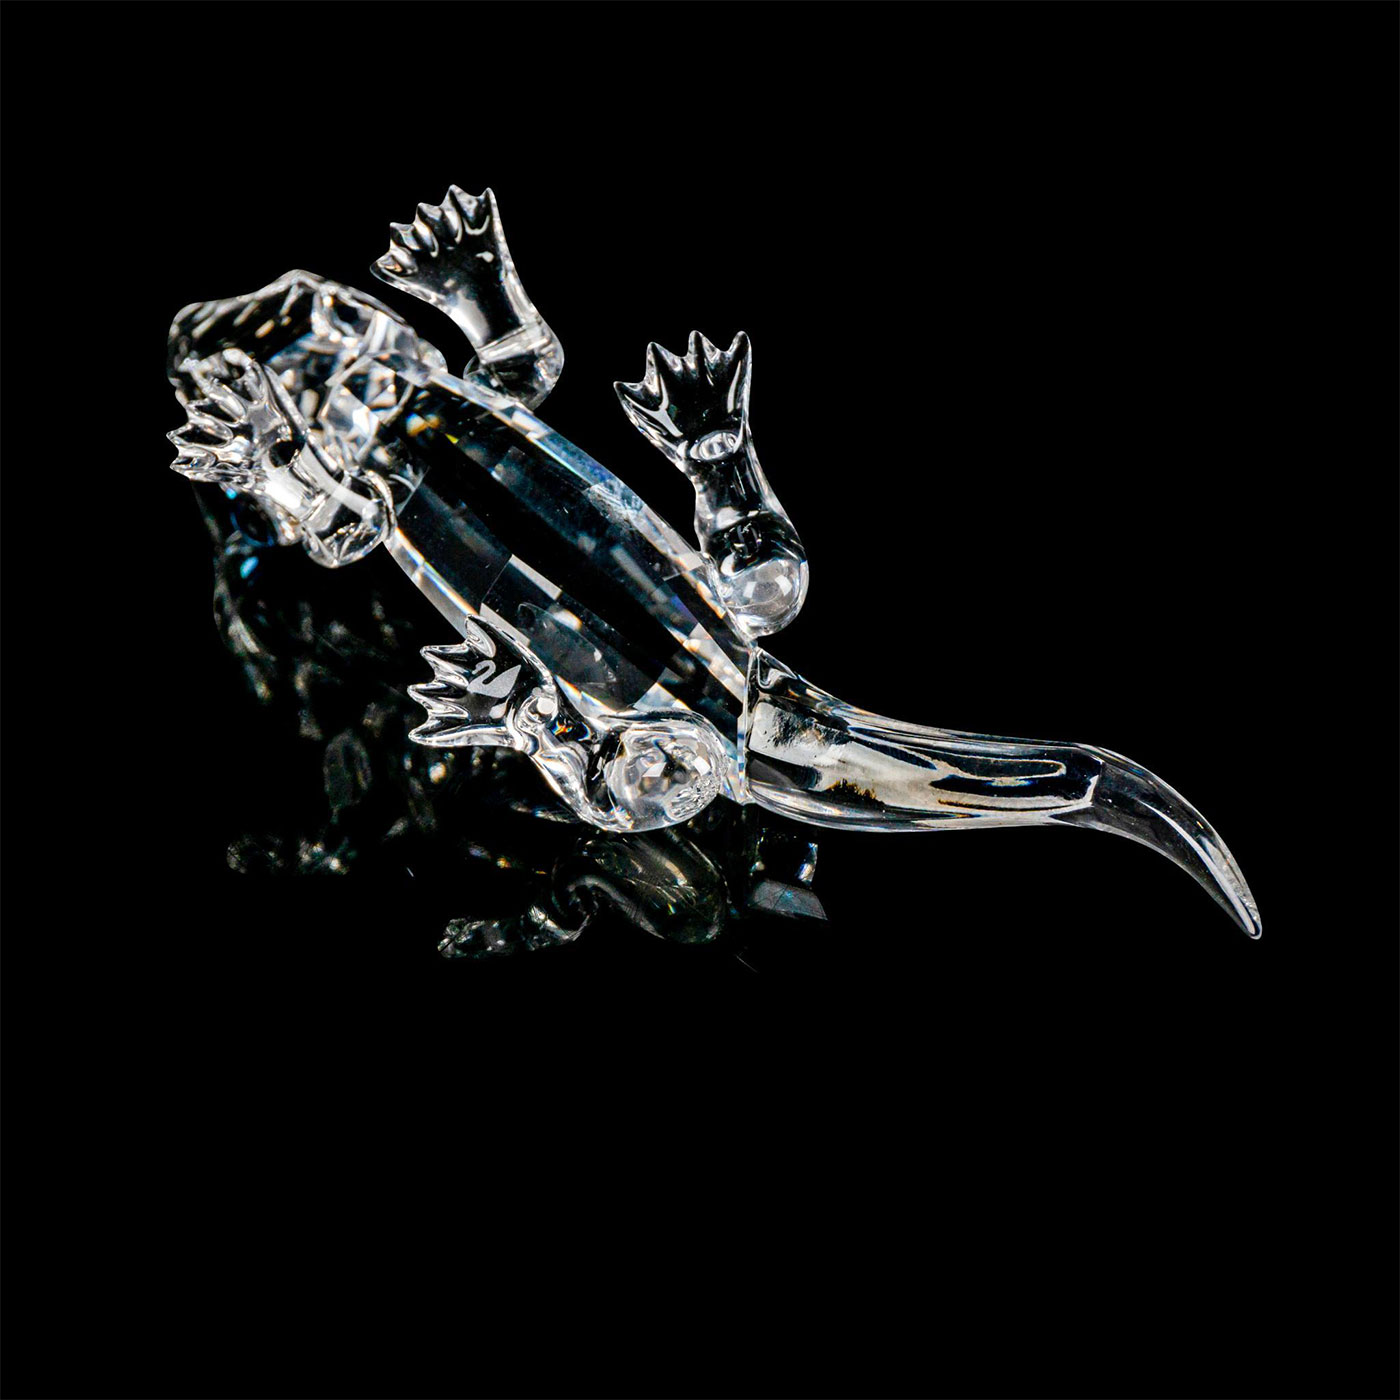 Swarovski Crystal Figure, Clear Alligator - Image 4 of 4